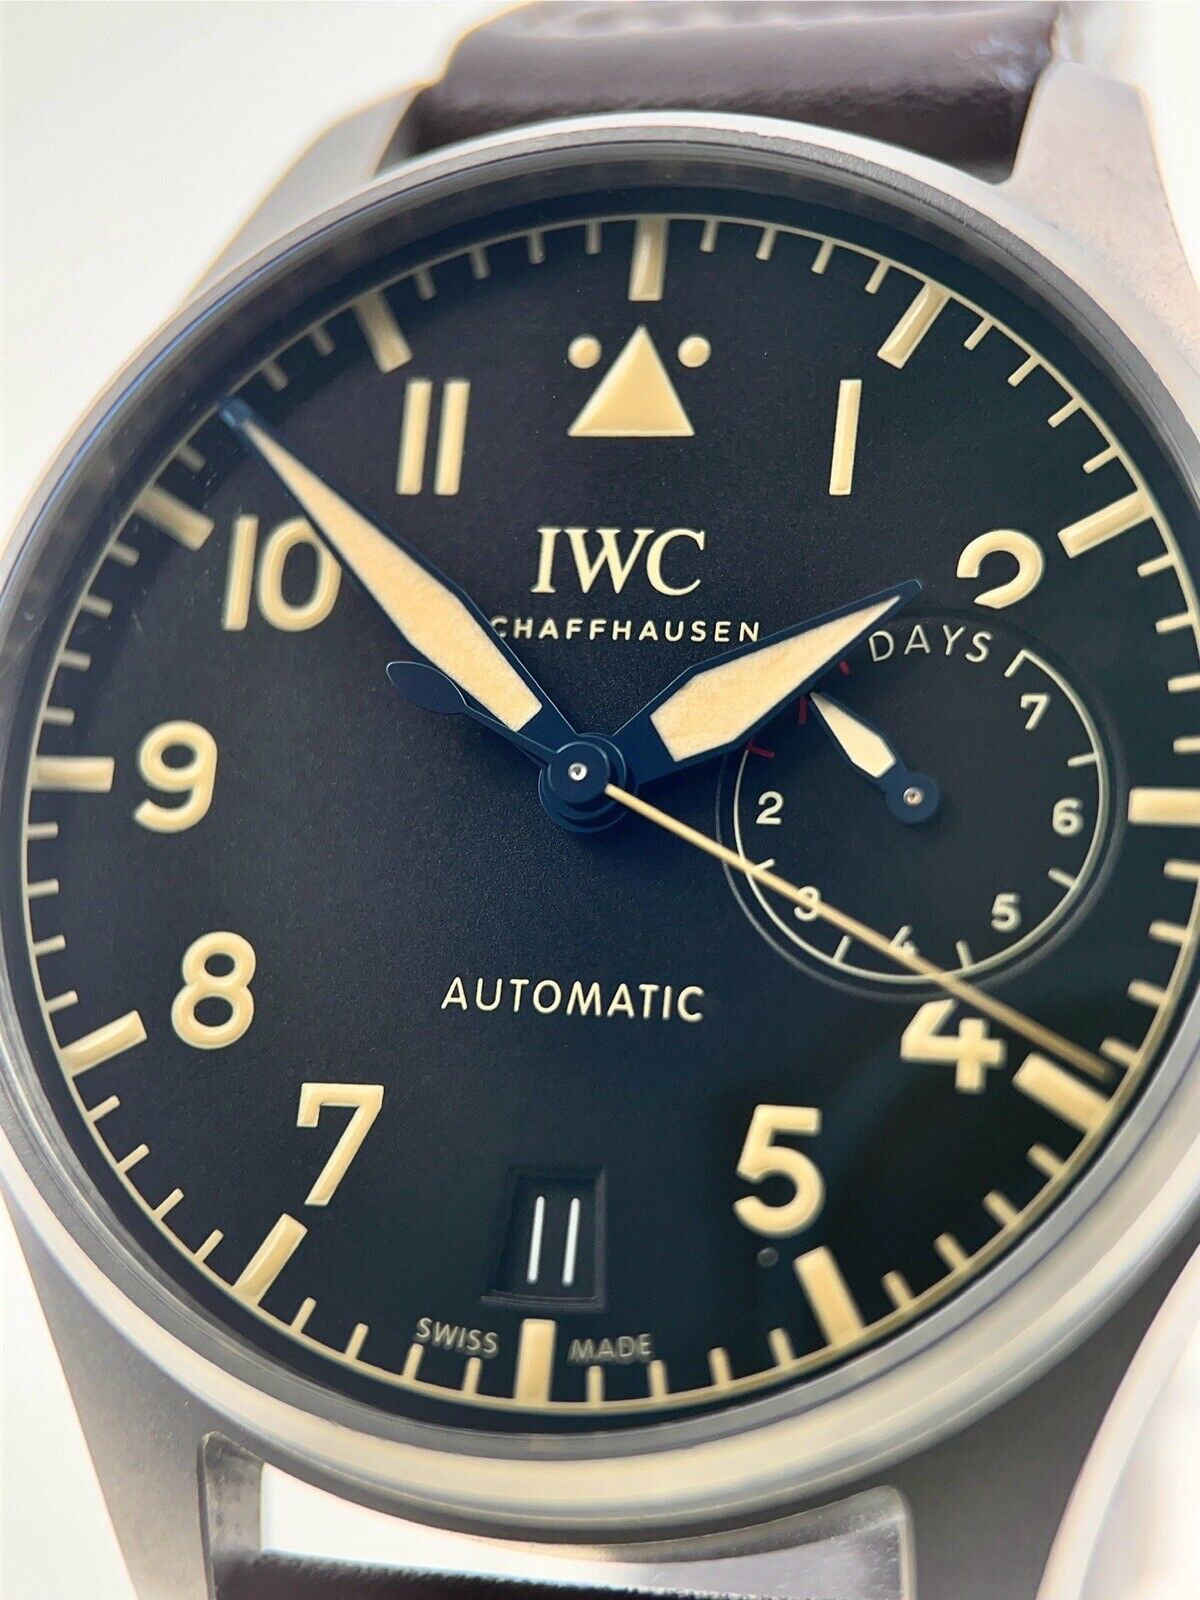 2018 IWC Big Pilot Titanium 7 Days Automatic Men’s Watch IW501004 - Box/Papers